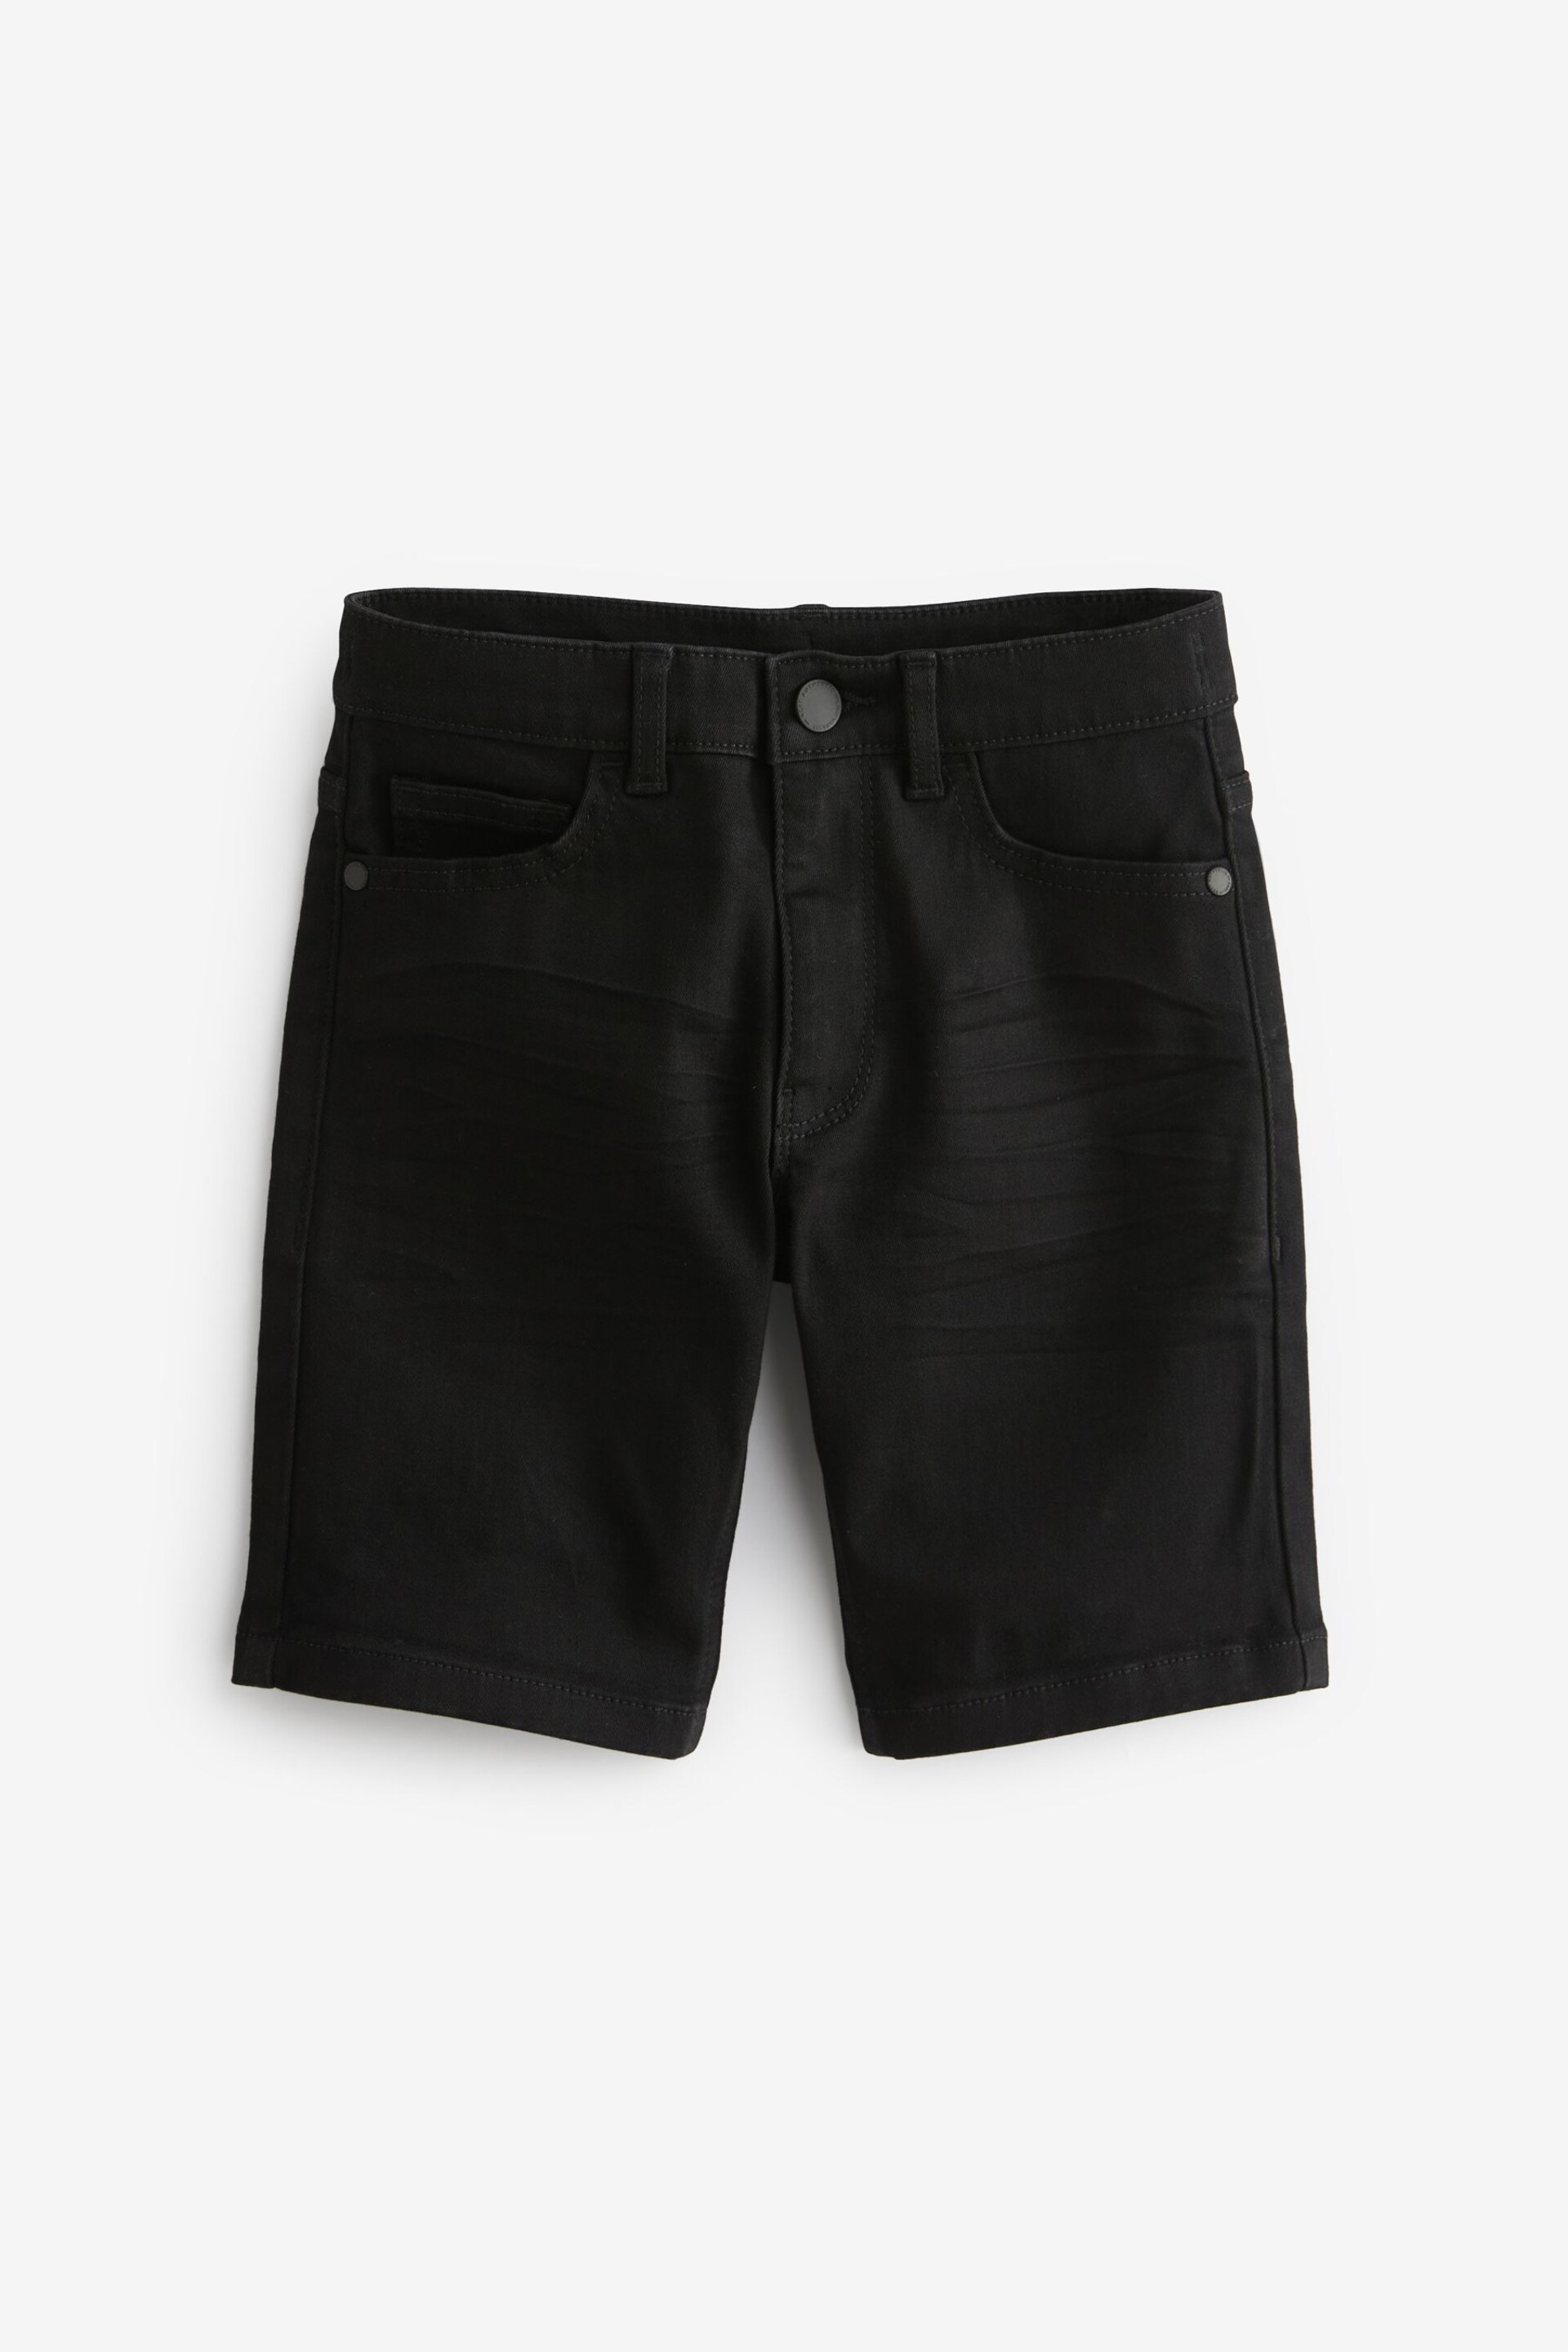 Black Denim Shorts (12mths-16yrs) - Image 1 of 3